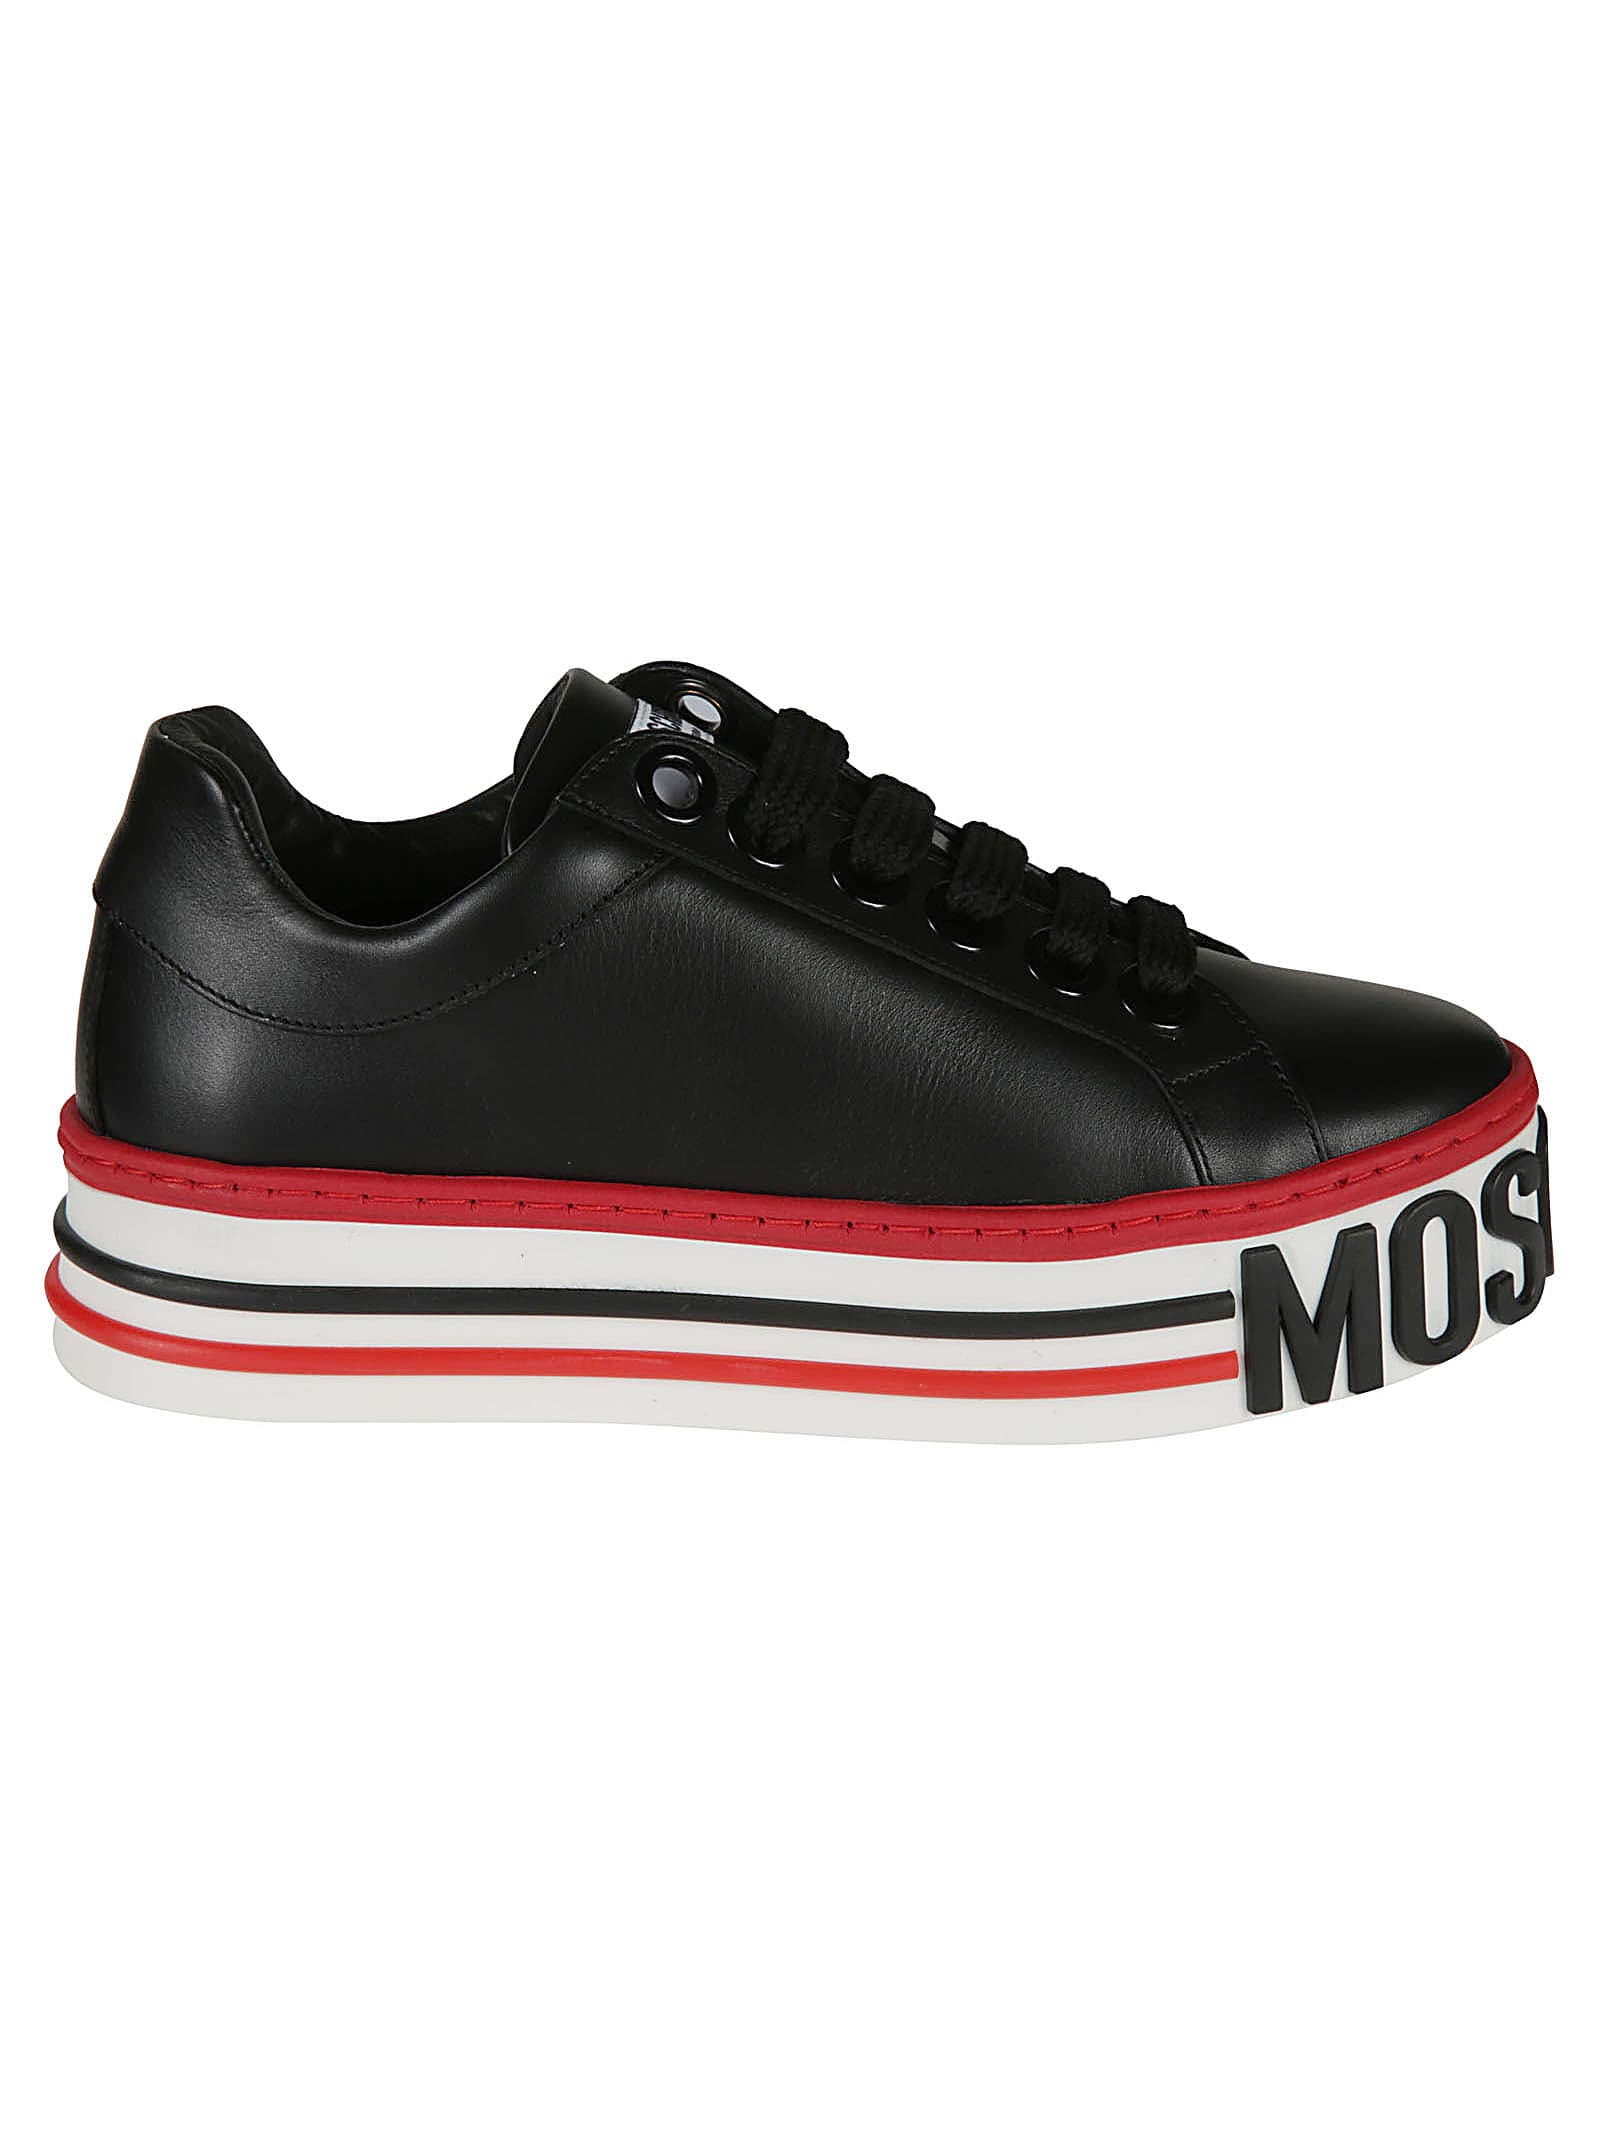 moschino platform sneakers